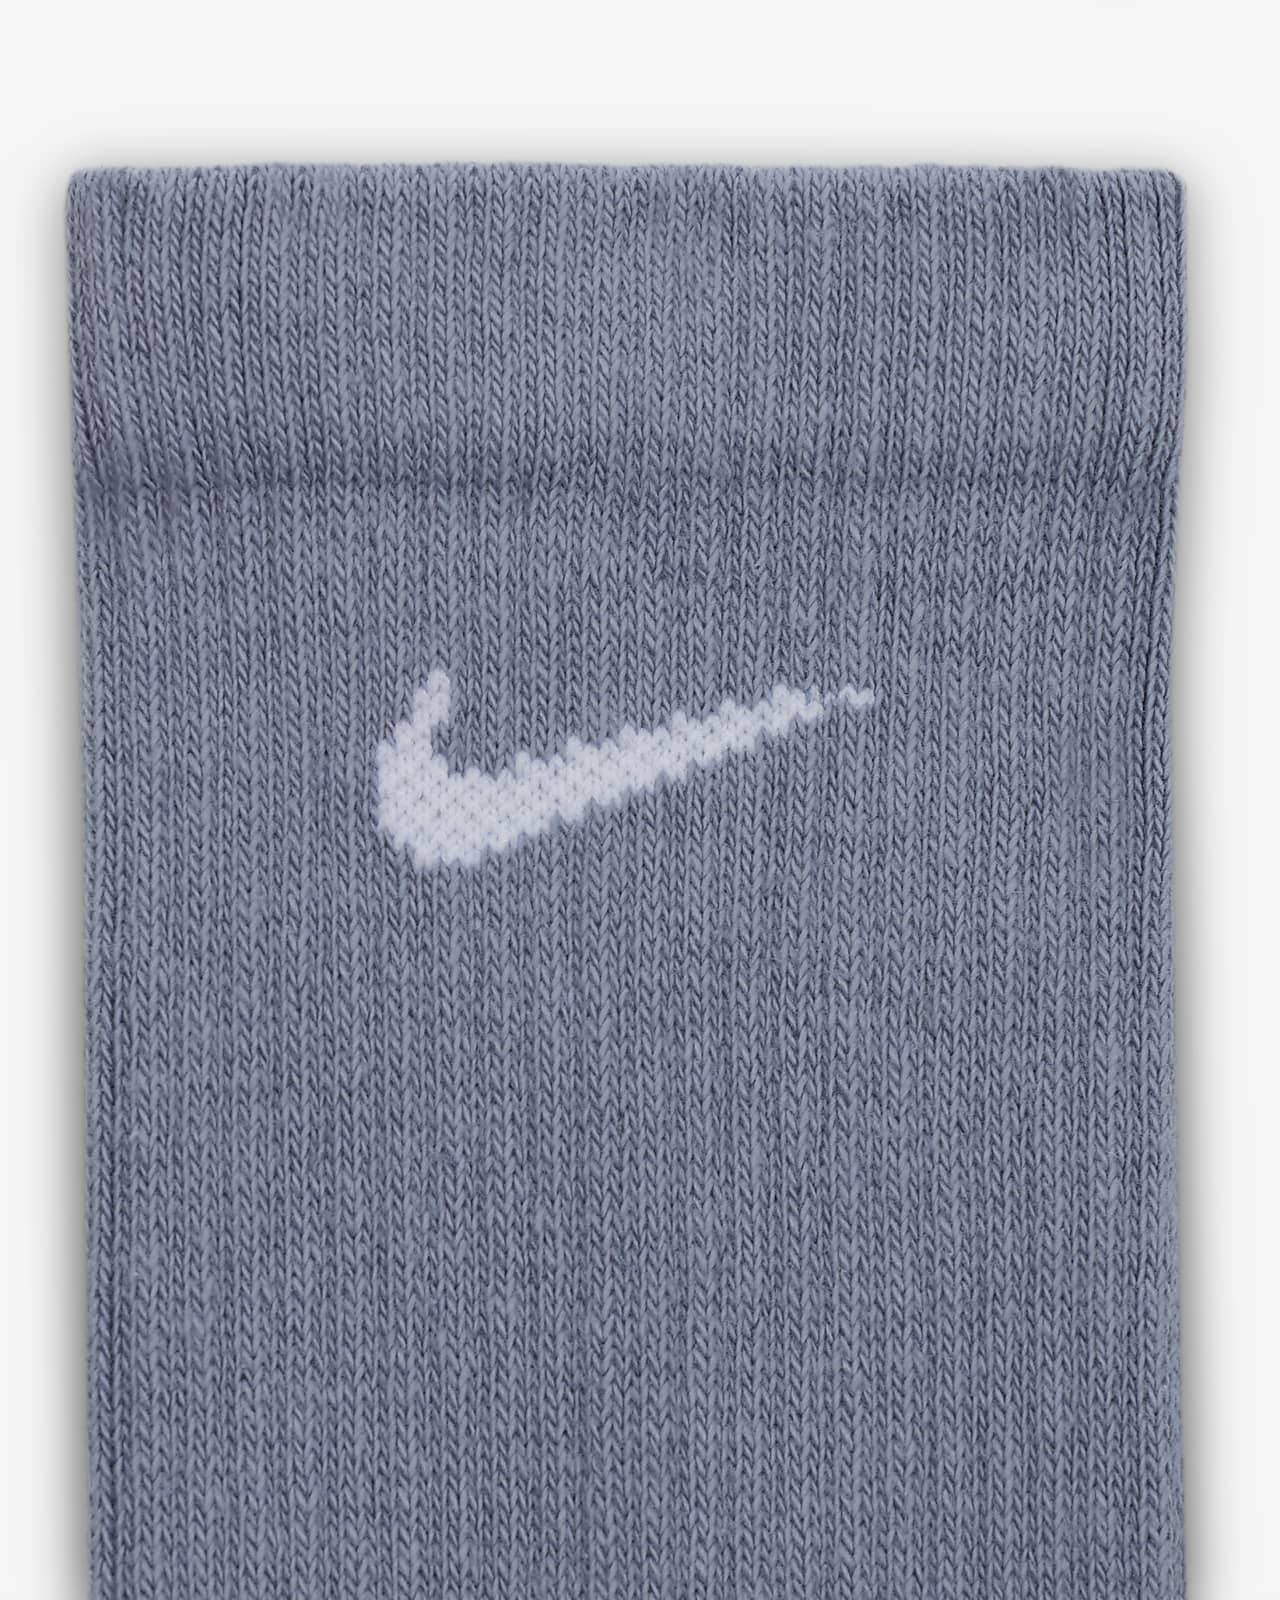 Nike Everyday Plus Cushioned Crew Socks Black - SS22 - US